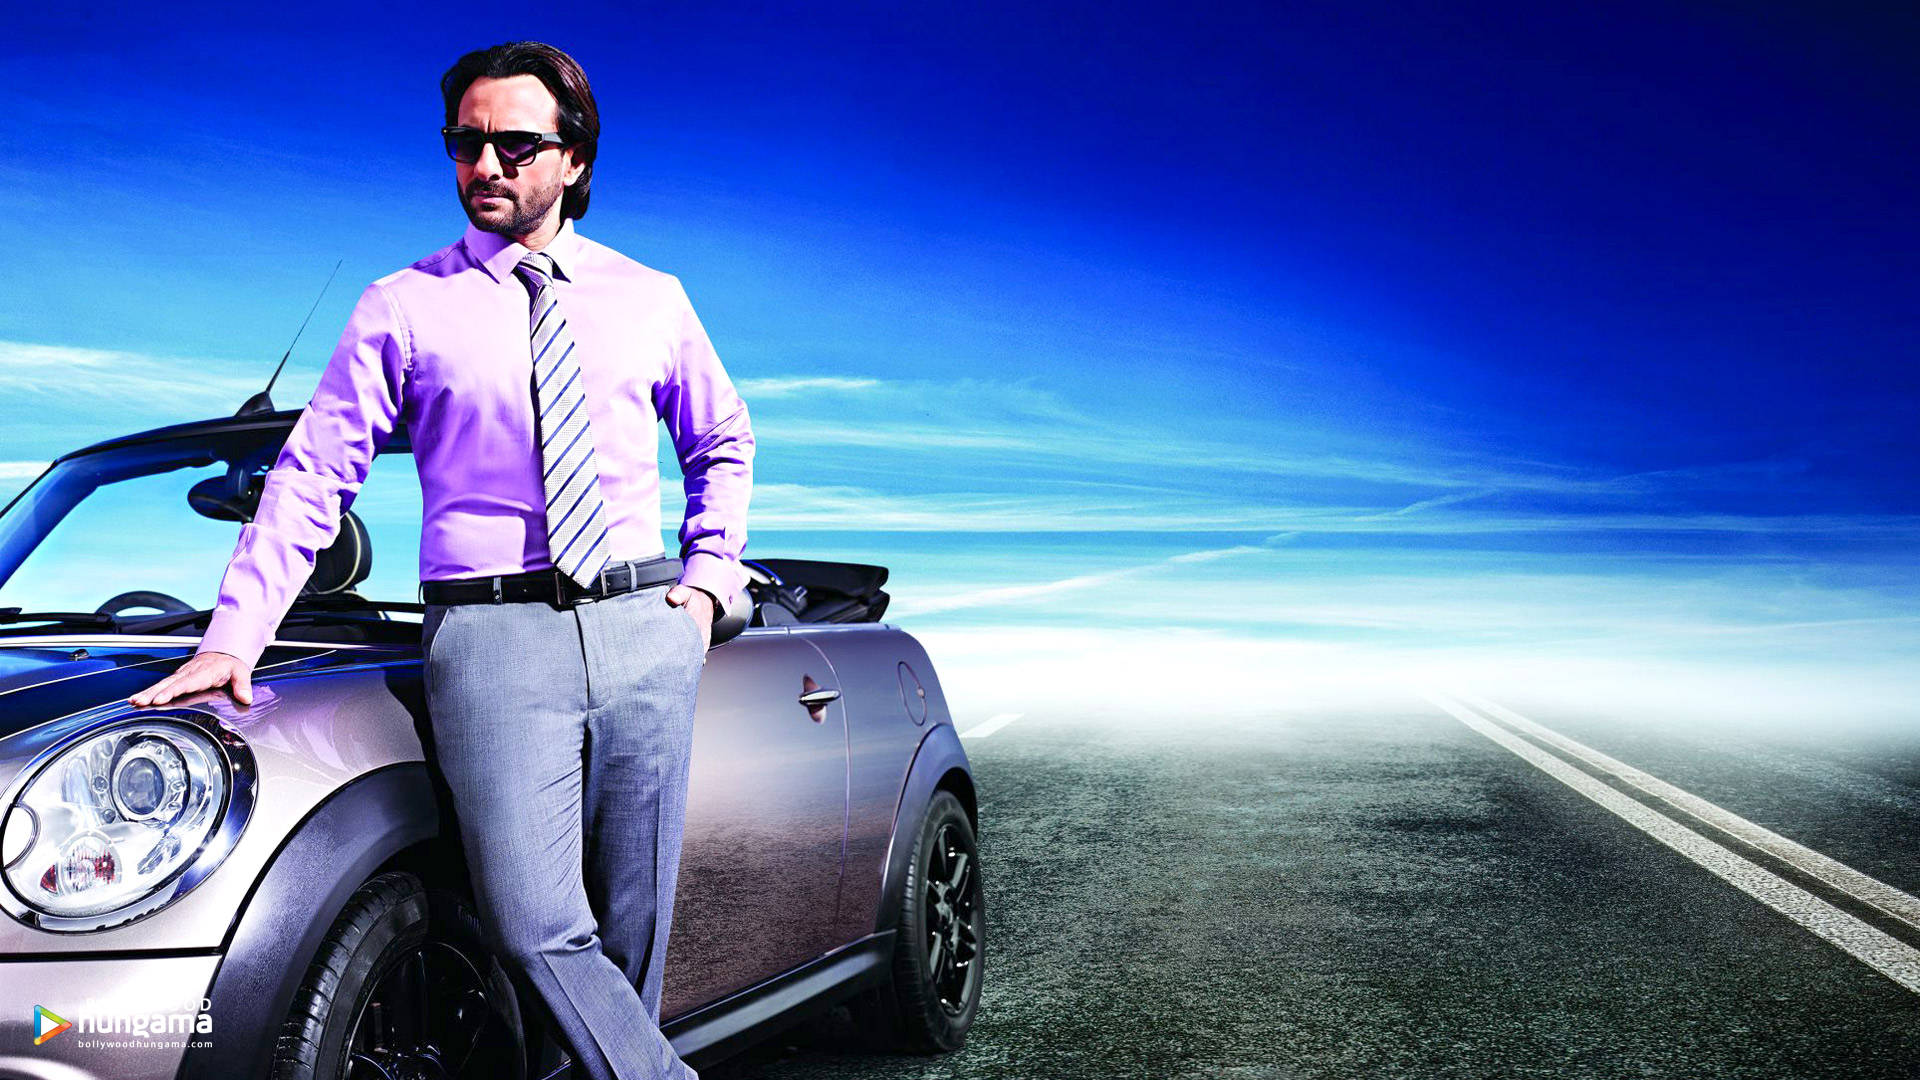 Saif Ali Khan Photoshoot With Sports Car Background